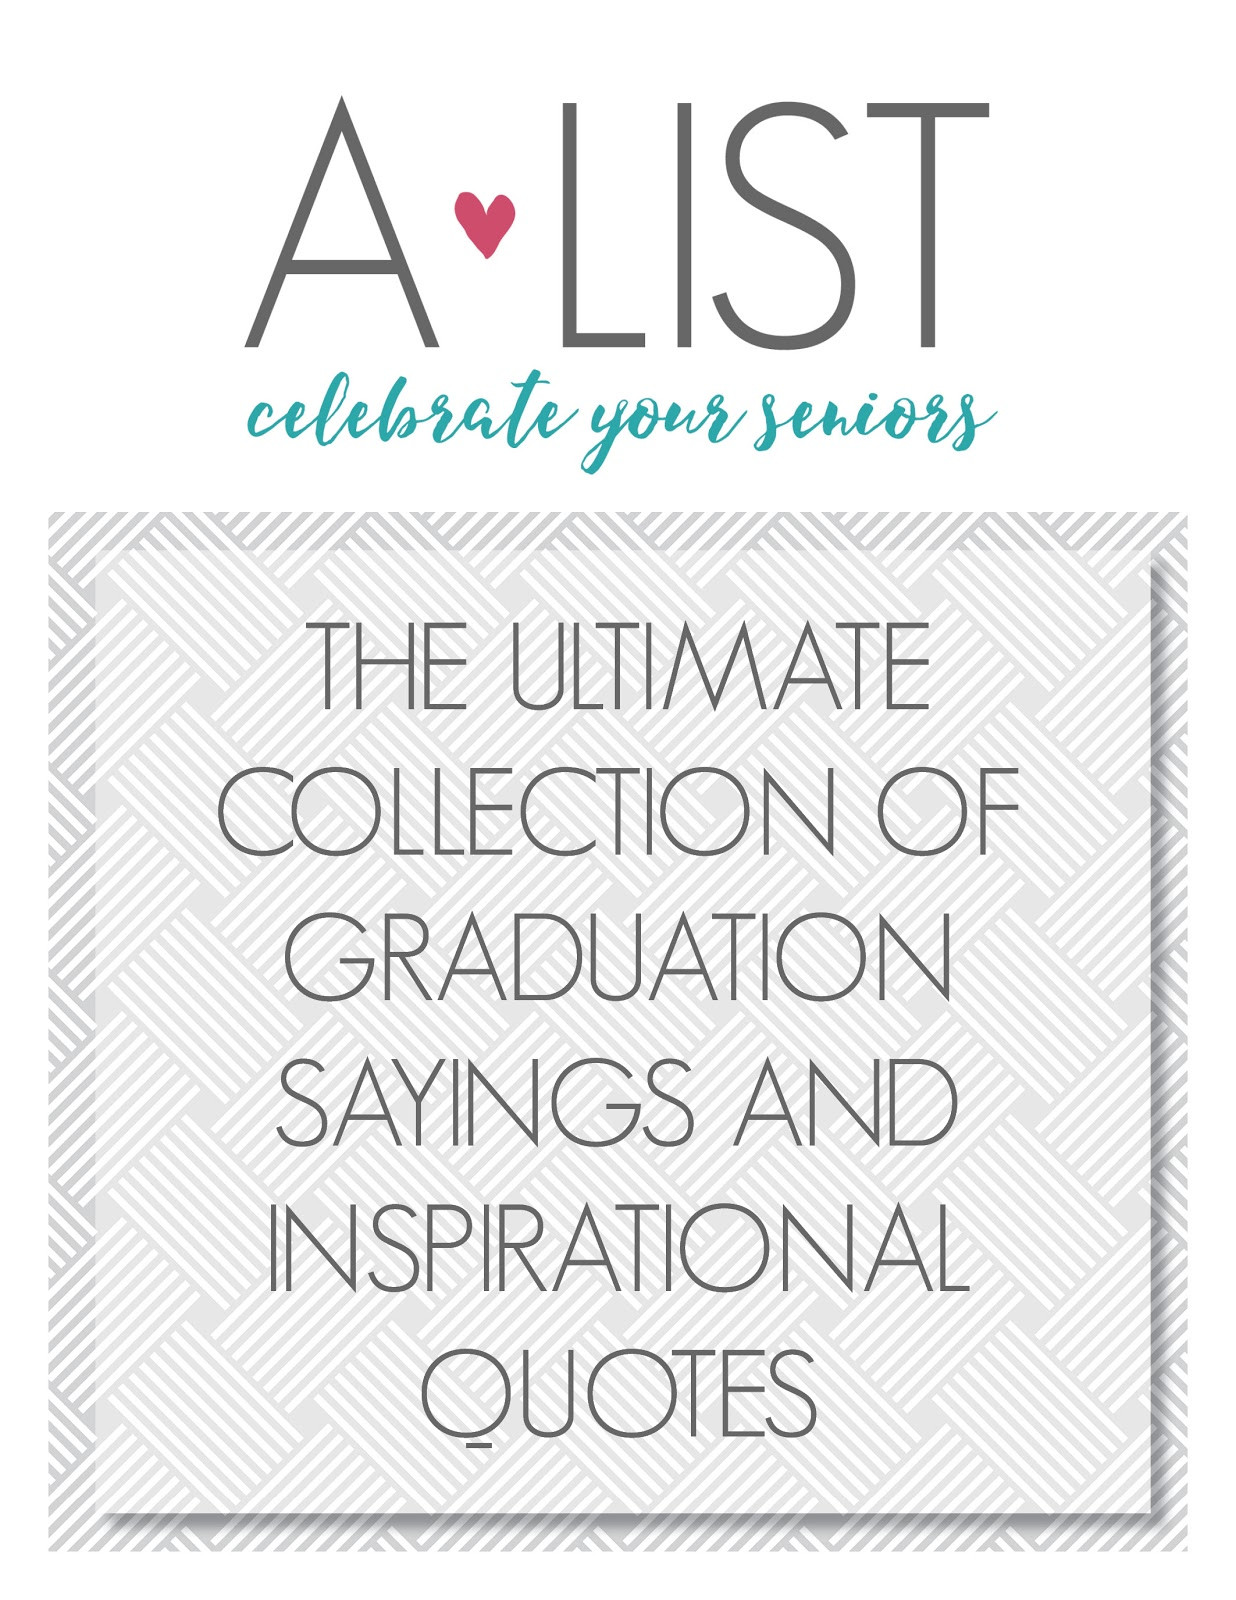 Best Graduation Quotes
 Top 13 Short Quotes for Your Graduation Cap